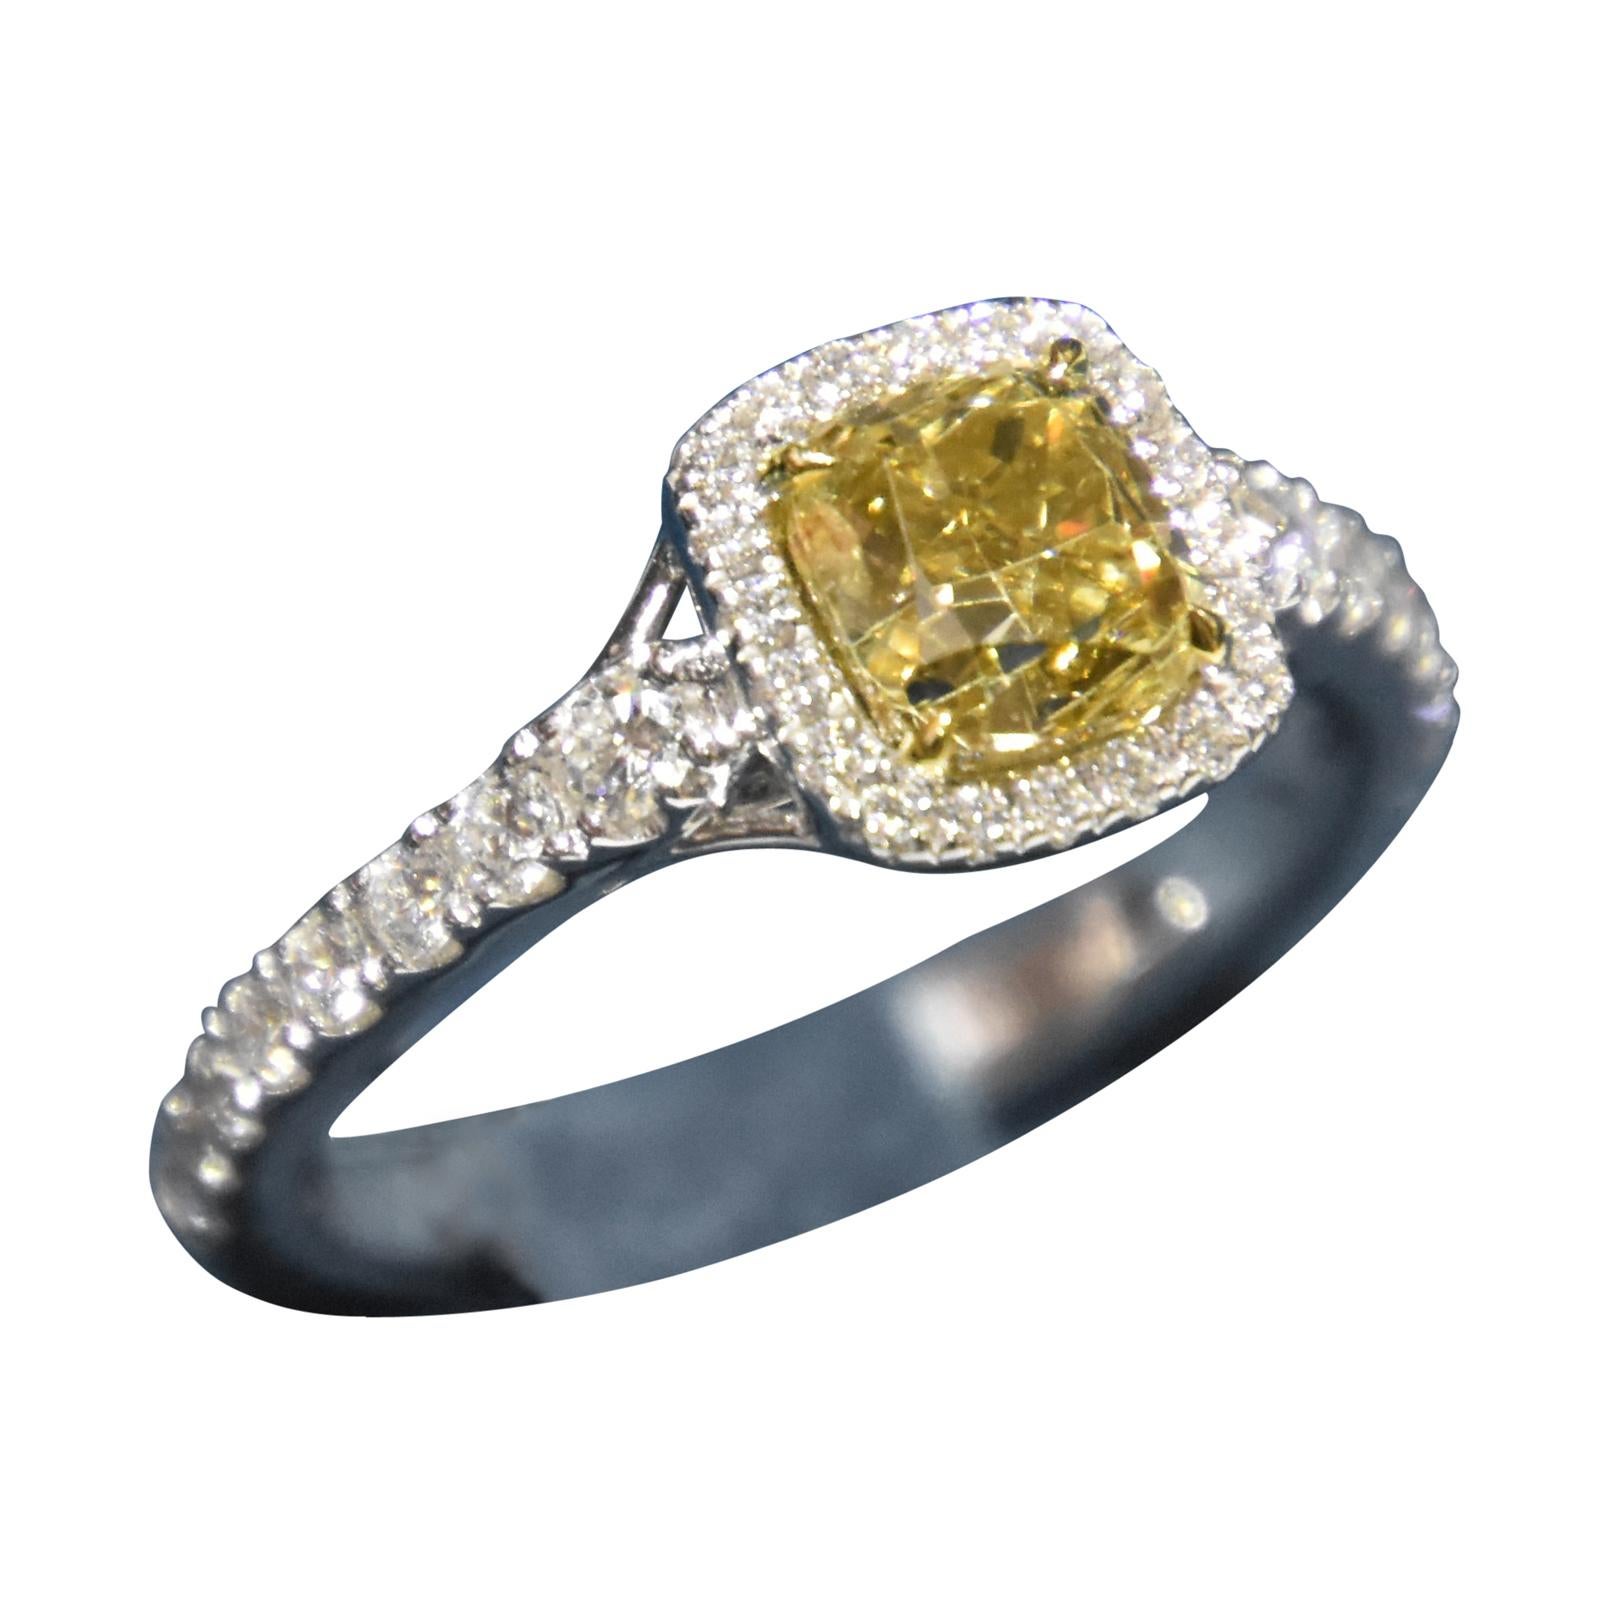 KAHN GIA Certified 1.58 Carat Fancy Brown Yellow Diamond Ring For Sale